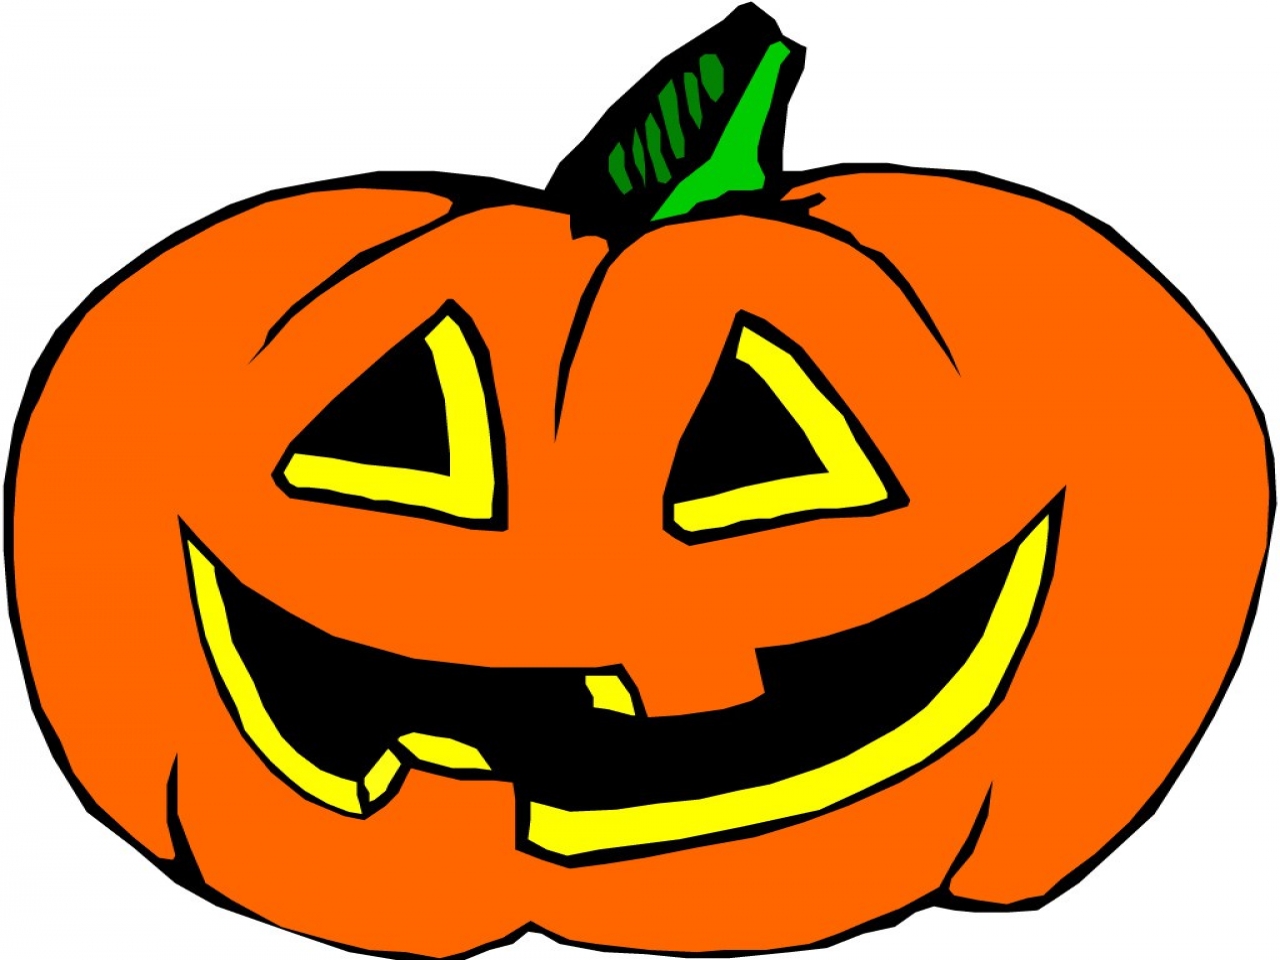 Halloween Cartoon Images Free : Halloween Cartoon Skeleton Ghost, Png ...